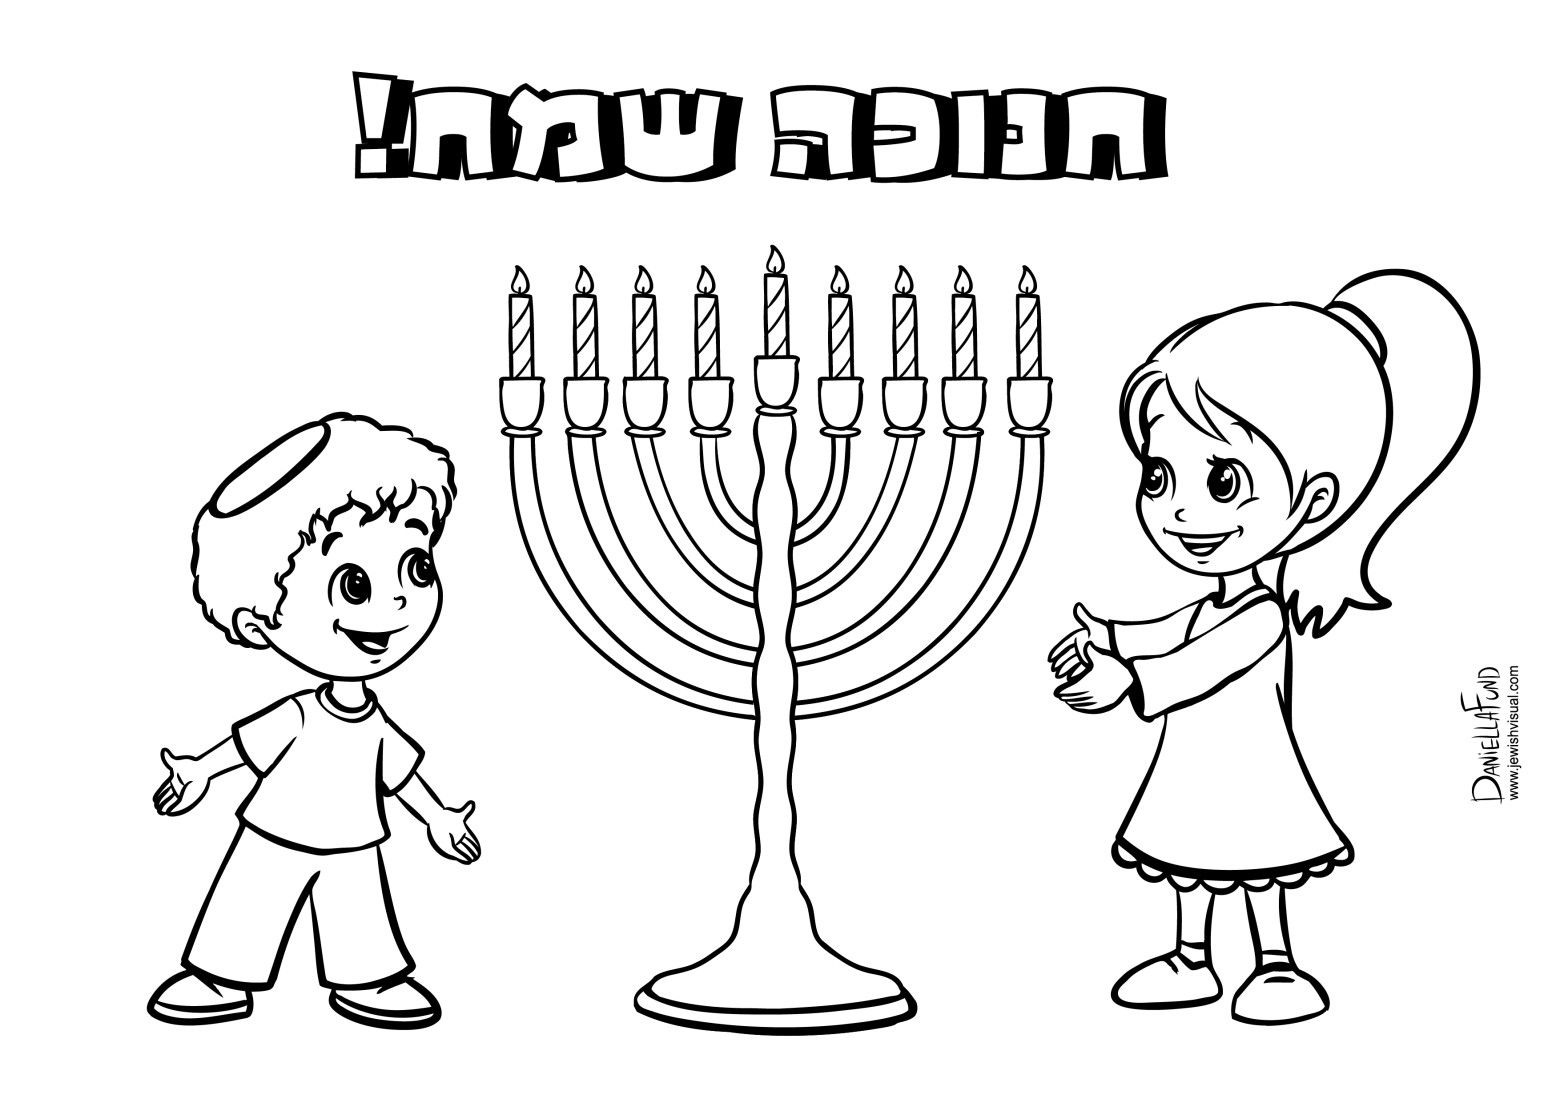 Happy Hanukkah Kids